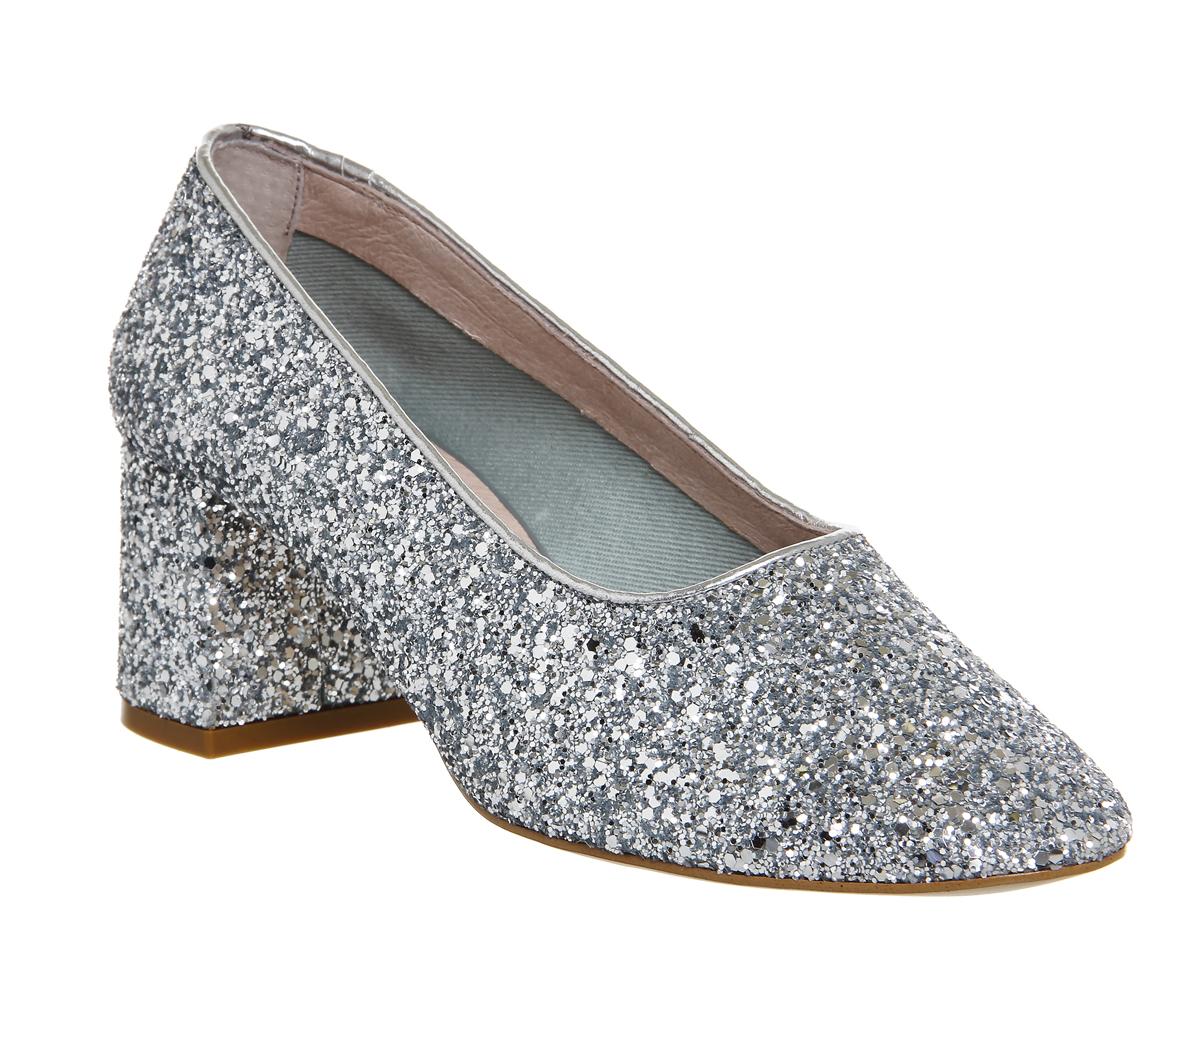 ASOS Switch It Up Heels | Heels, Silver shoes, Shoes women heels